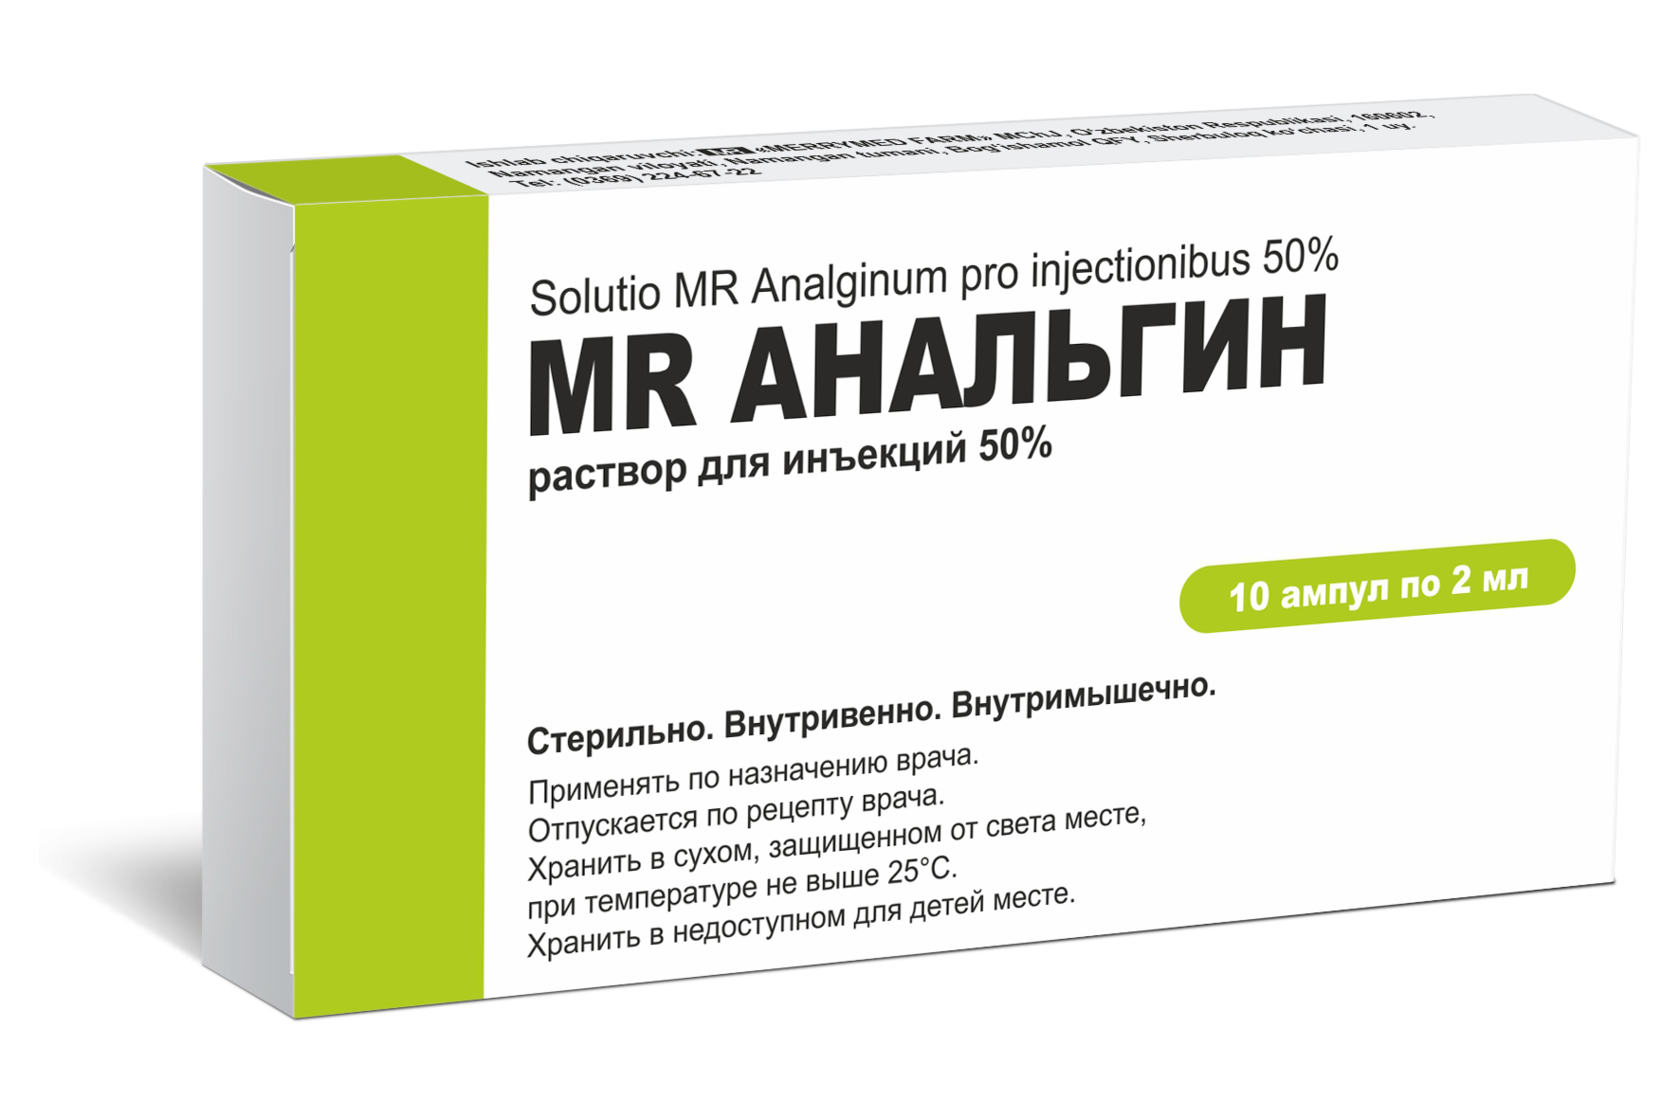 Метамизол натрия 50 2мл. Раствор анальгина 50% 2мл. Анальгин 50 мг/мл. 50 Раствор анальгина.